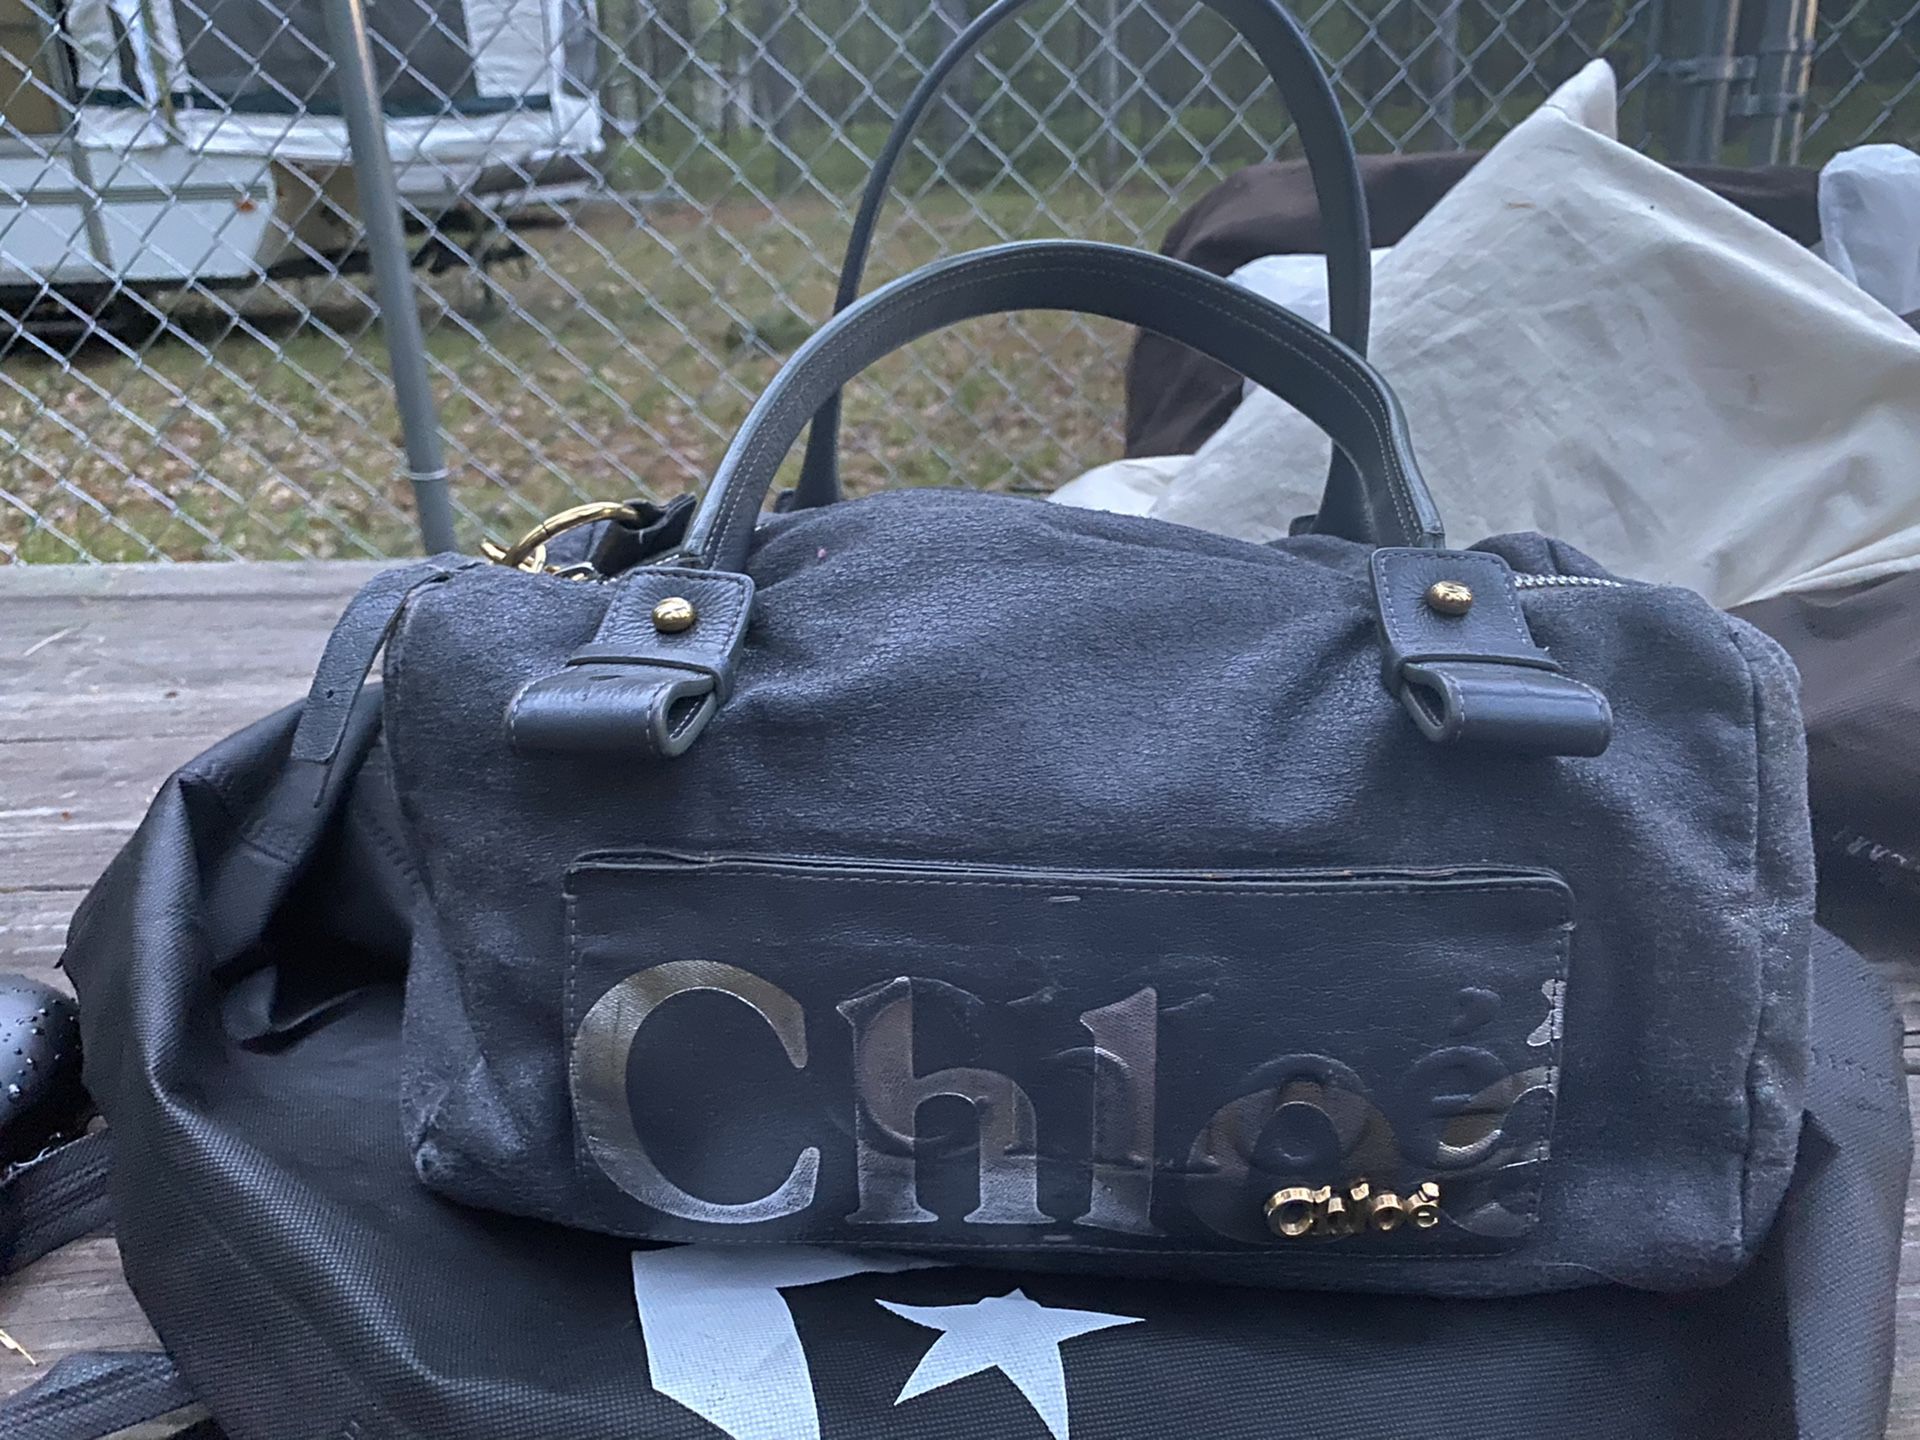 Authentic Chloe handbag